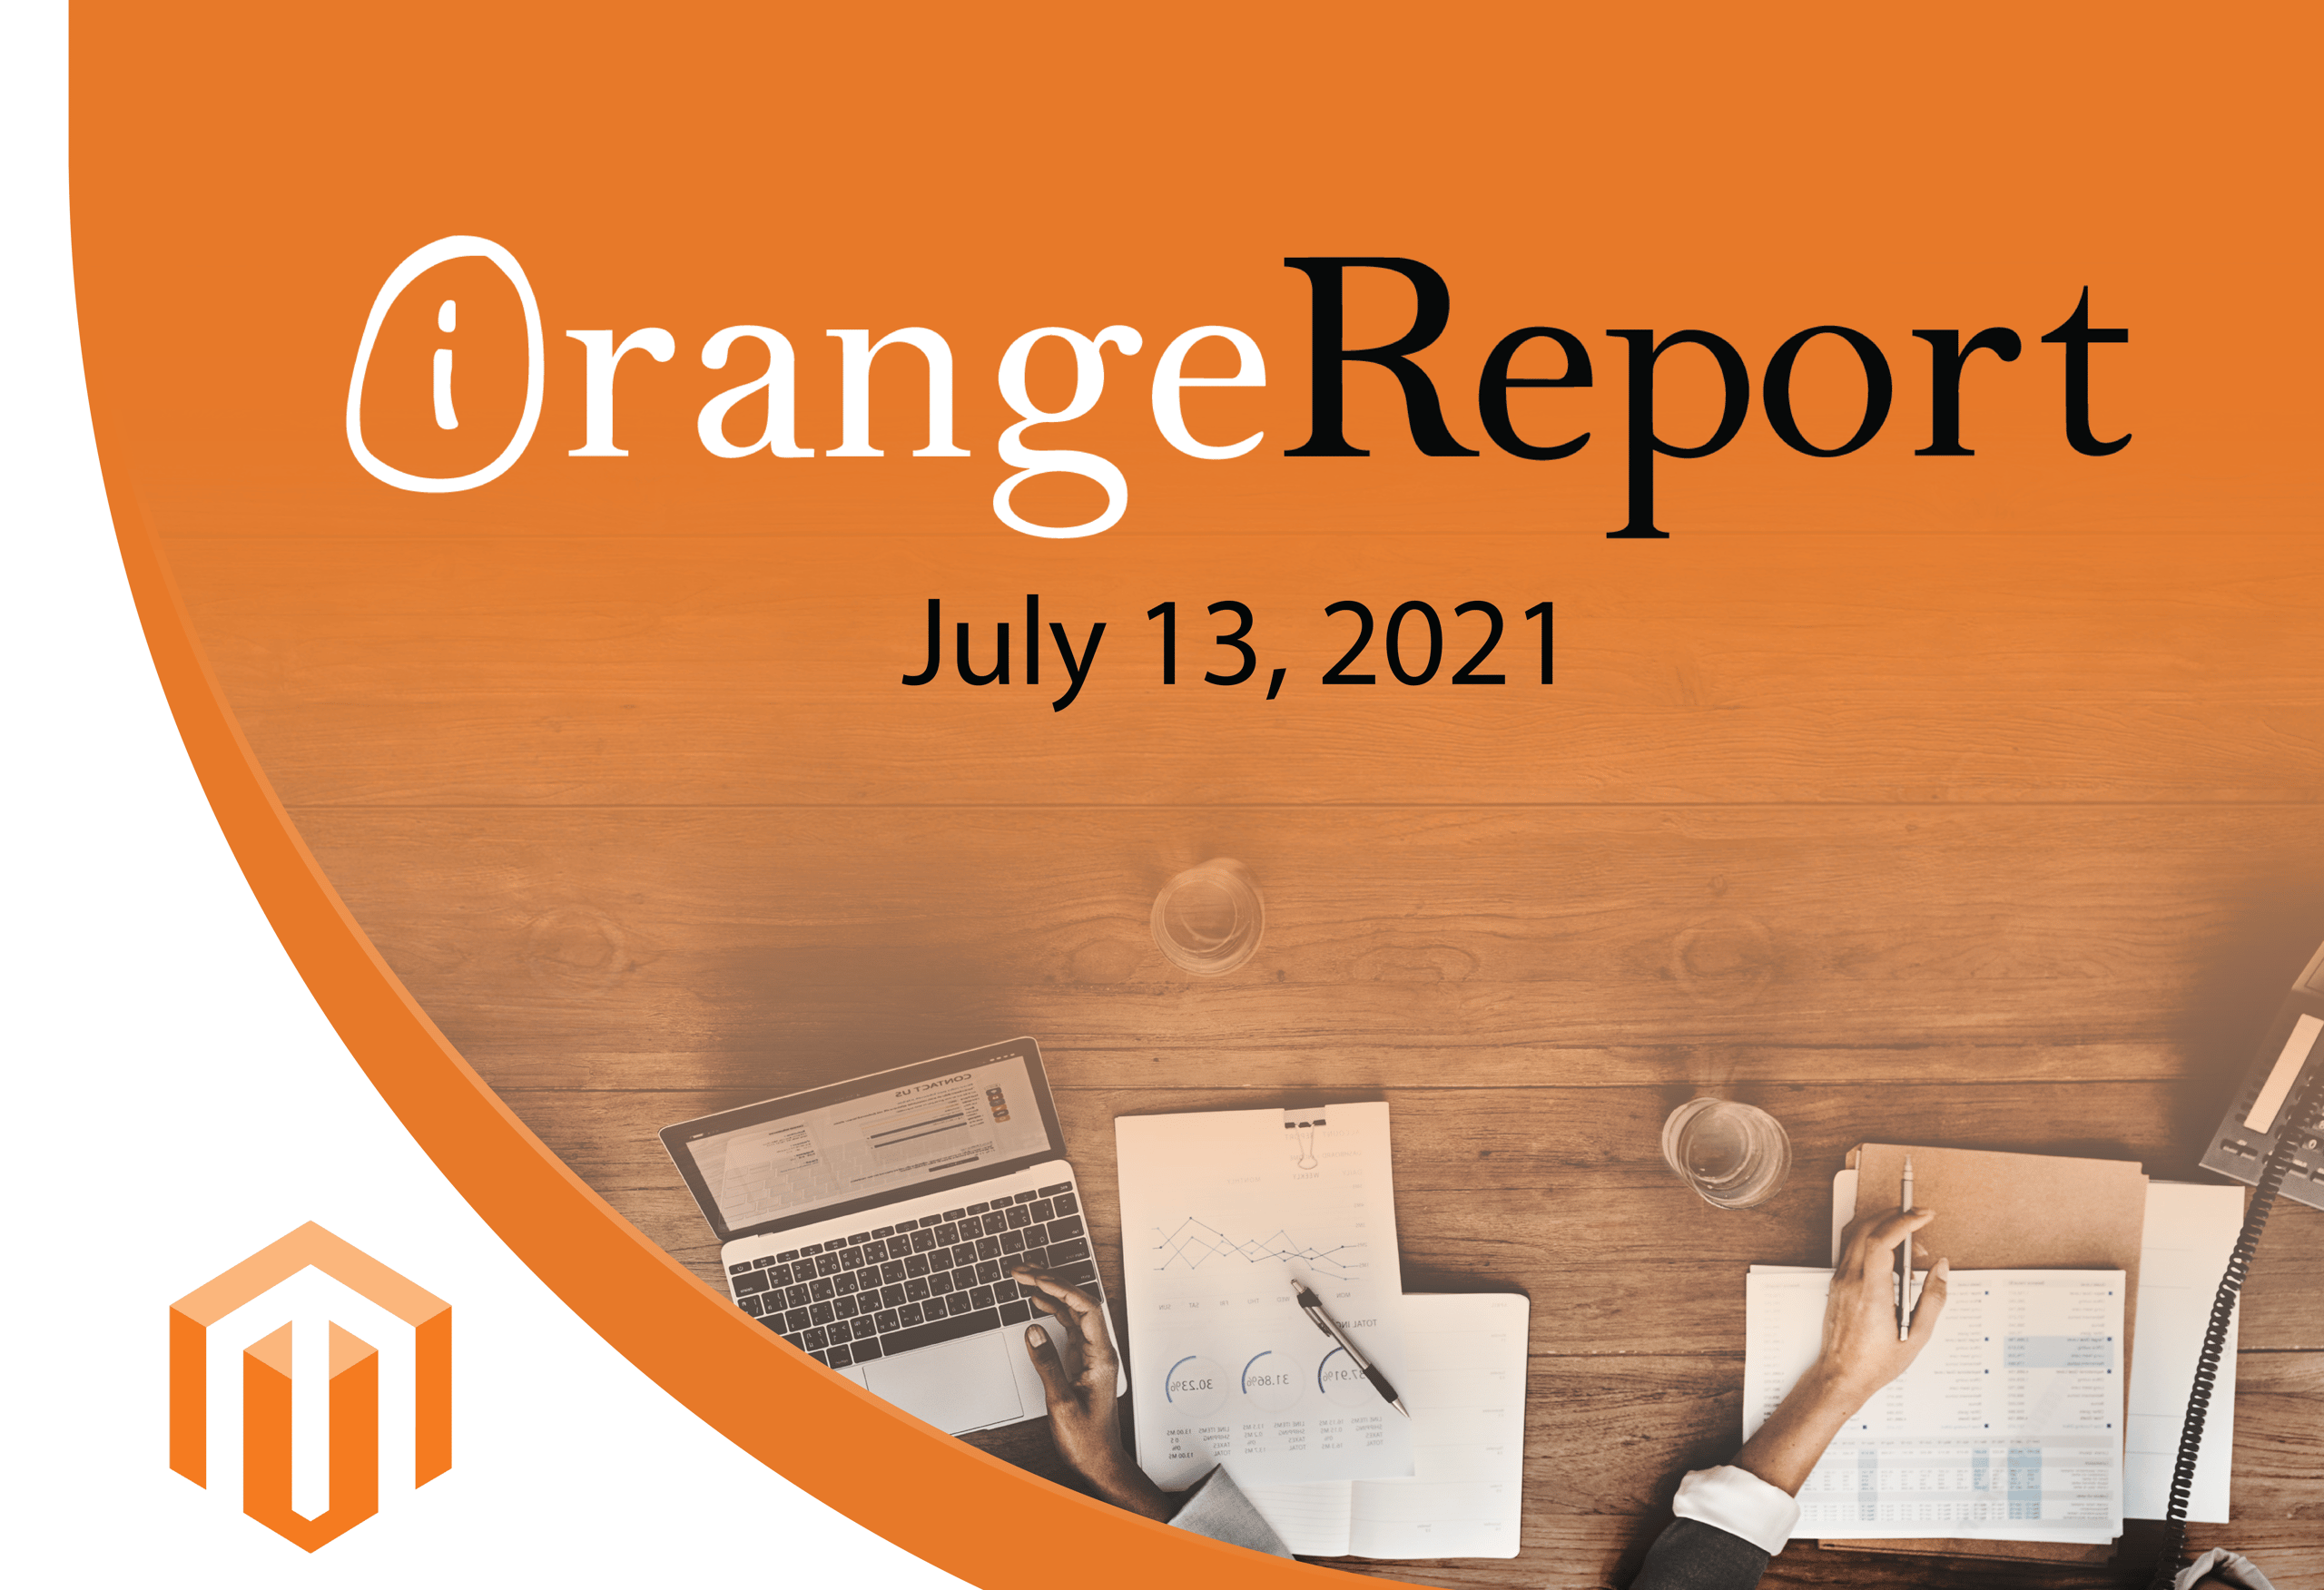 The July 2021 Orange Report